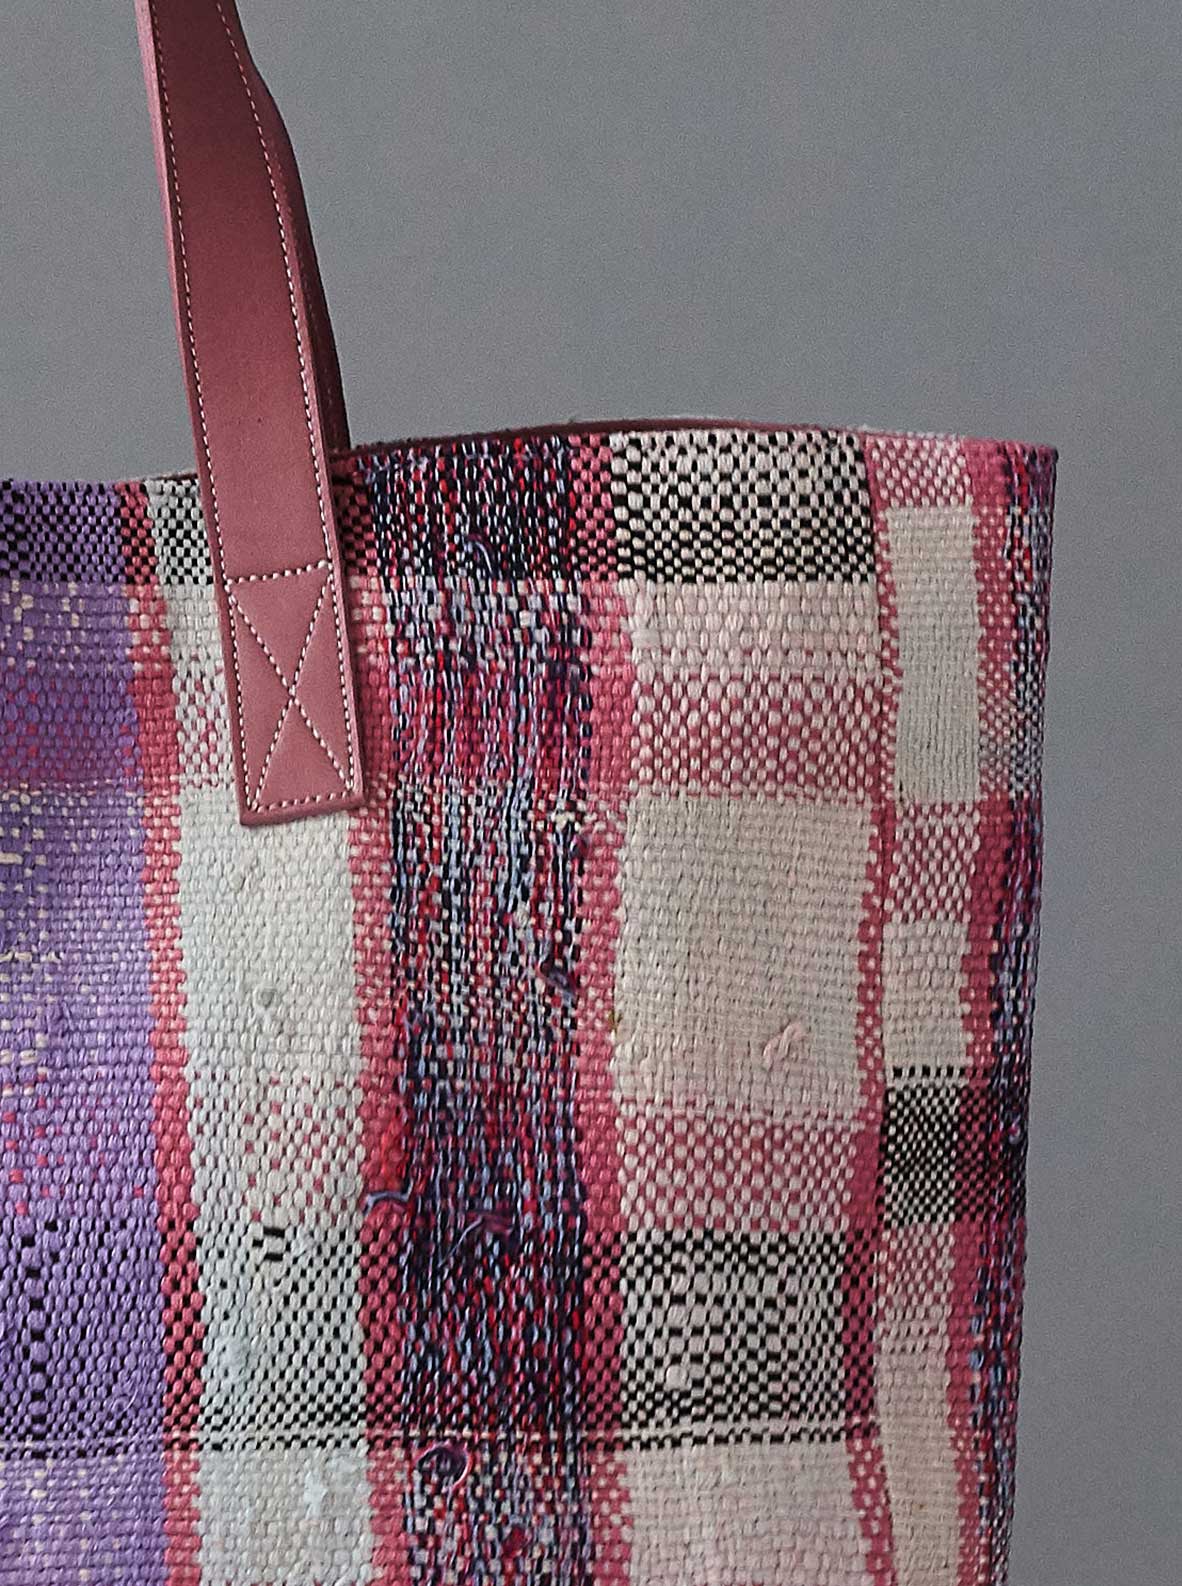 Larusi - Vintage textile tote bag